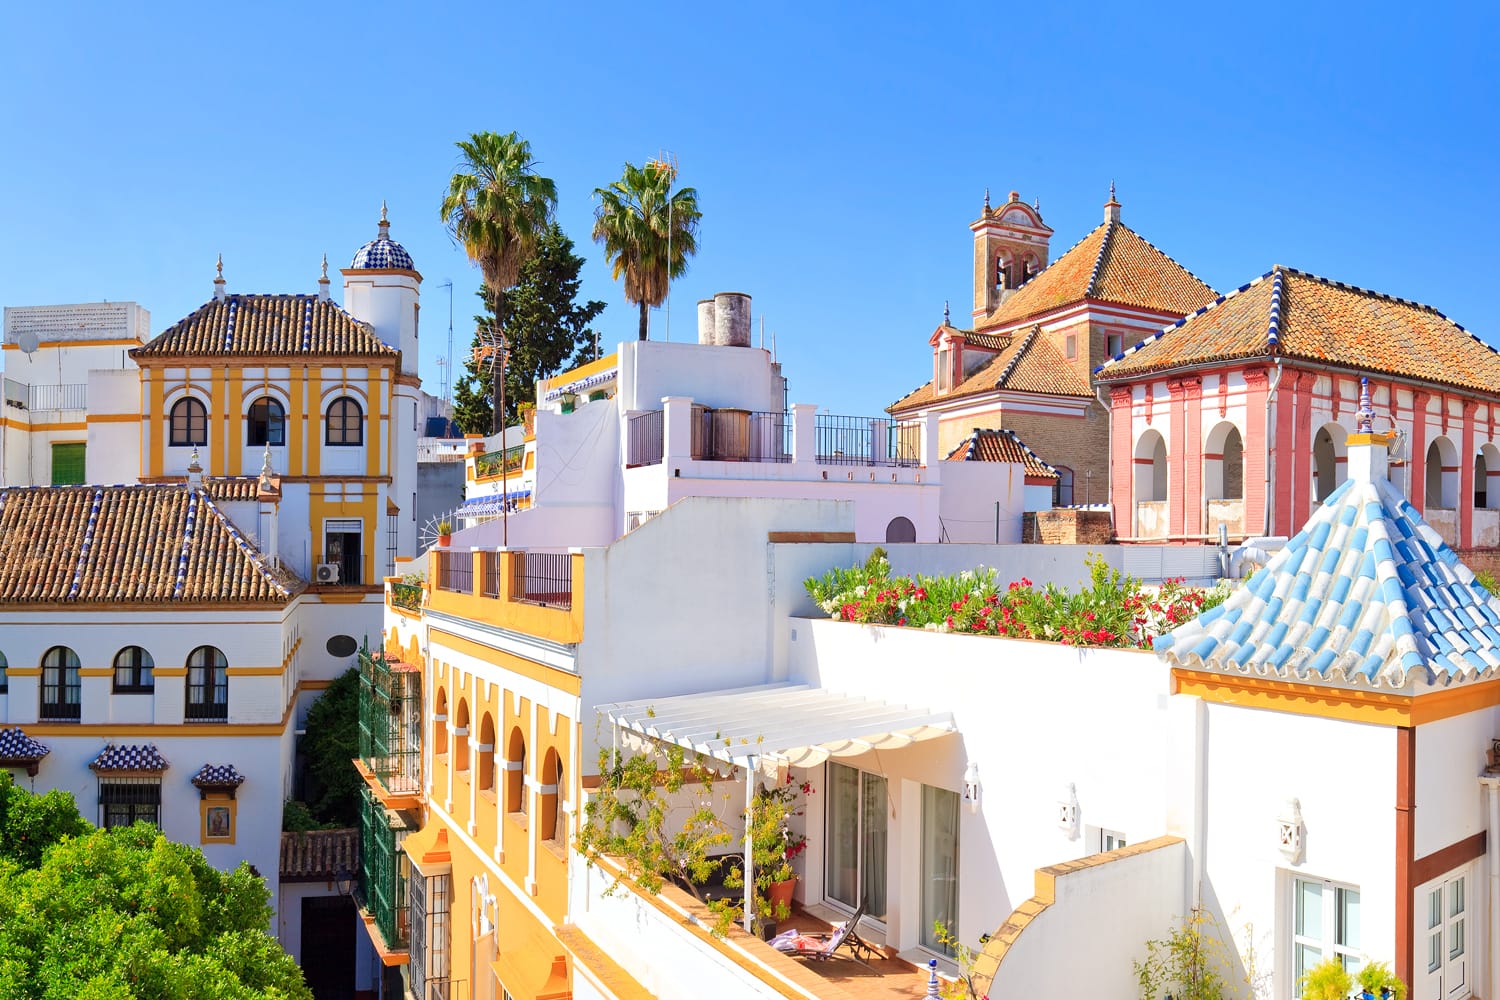 Rooftops of Seville, Spain